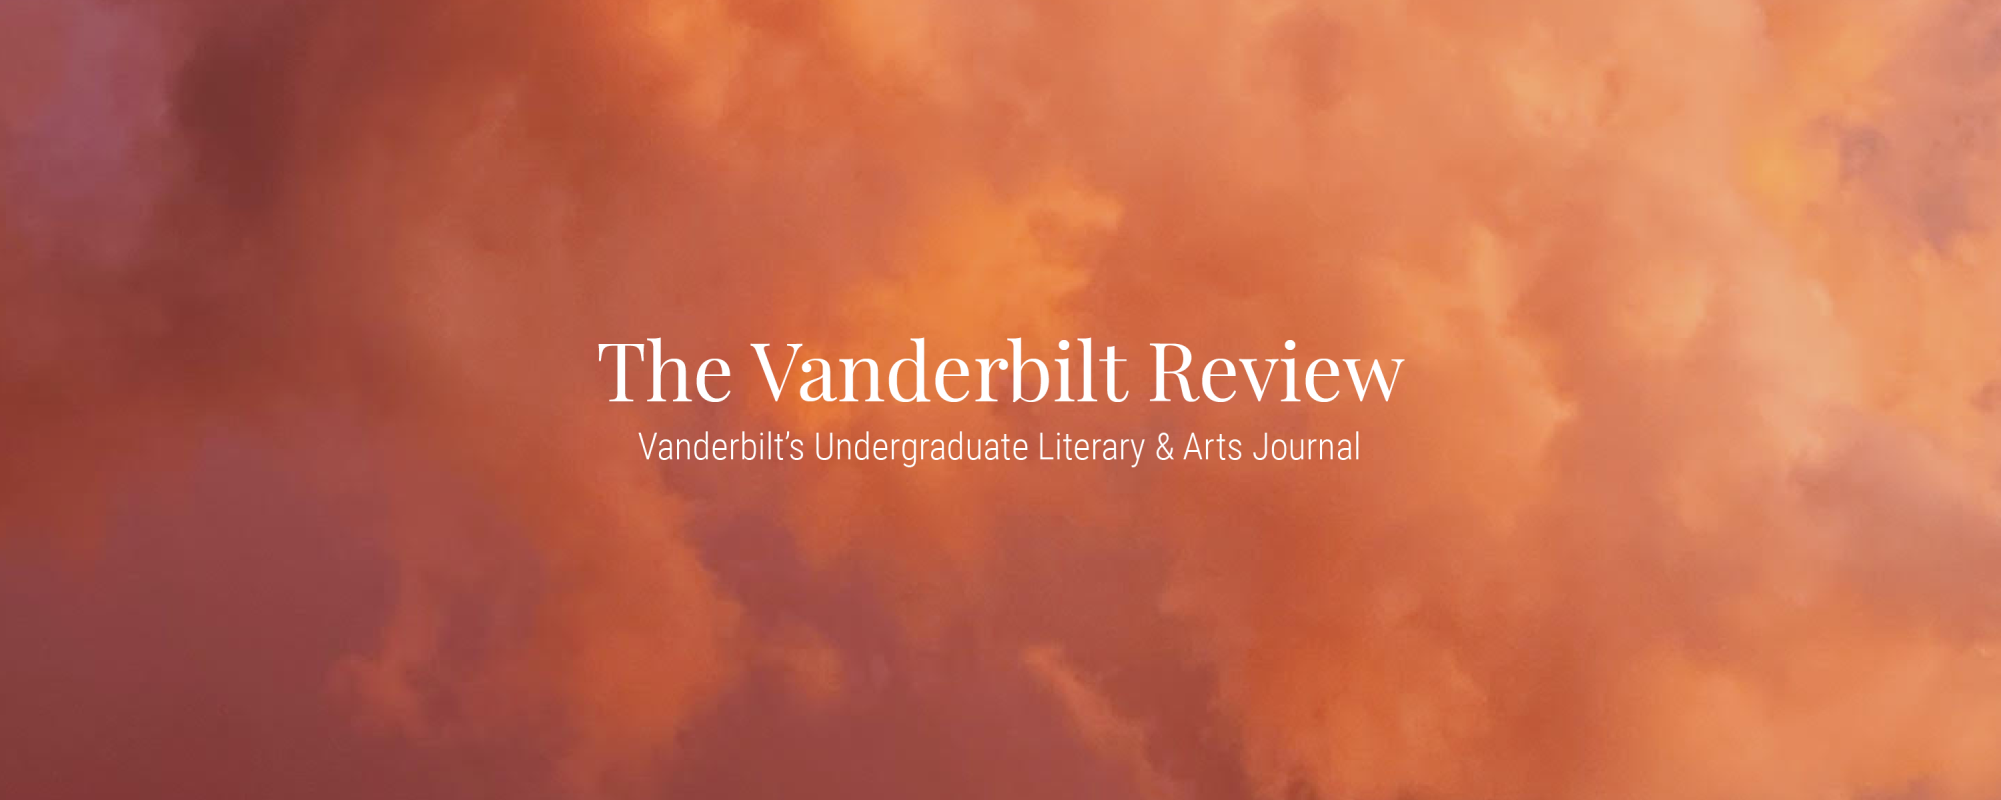 Vanderbilt's Undergraduate Literary & Arts Journal